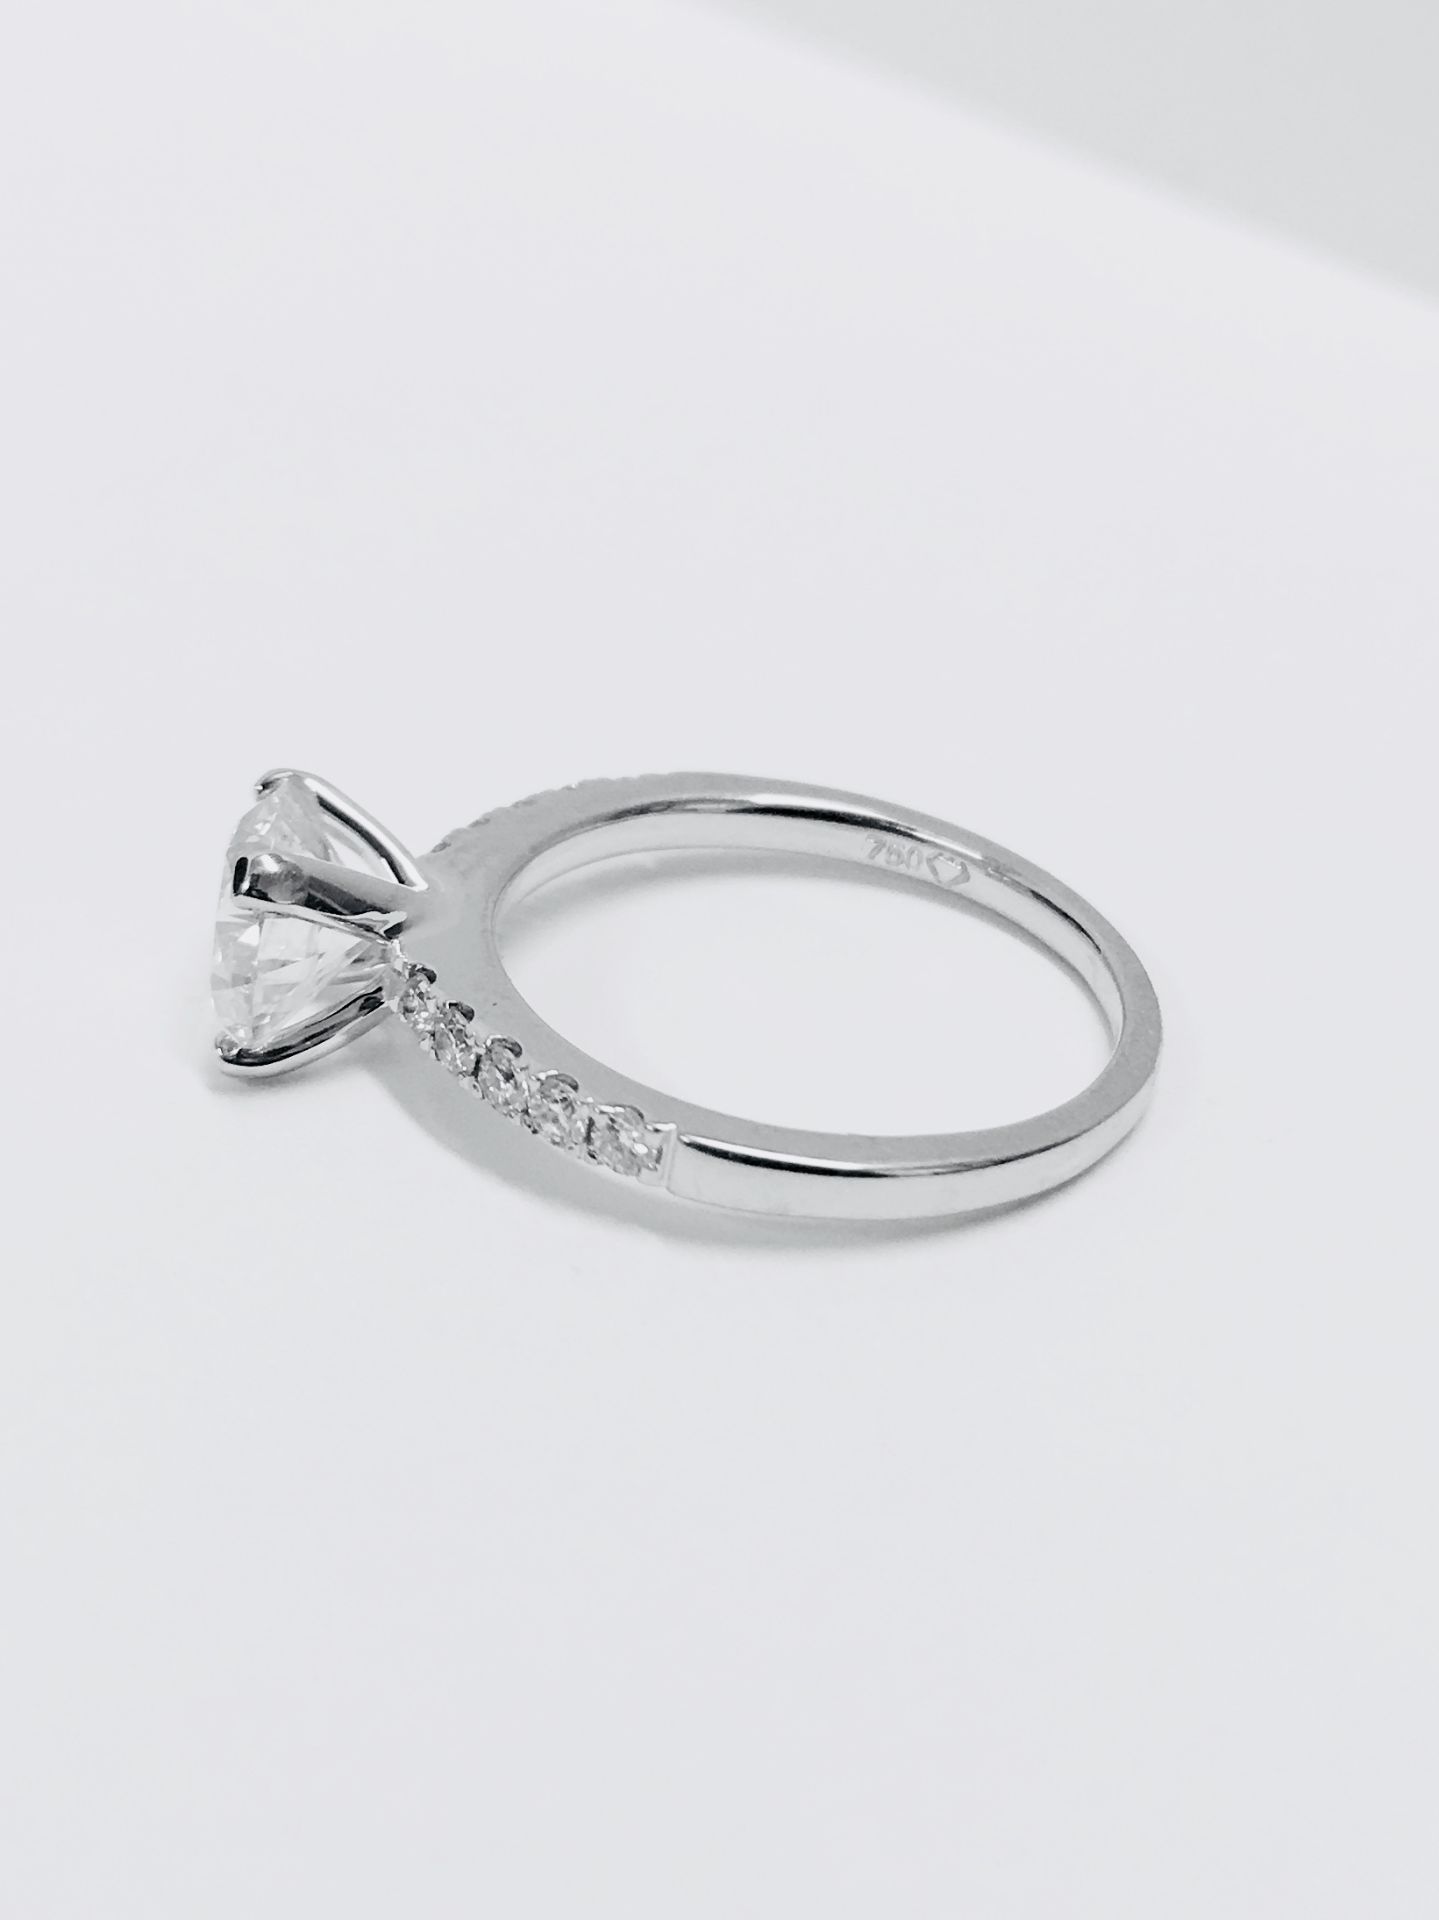 18ct white gold diamond solitaire ring,0.50ct brilliant cut diamond D colour vs clarity,3.5gms - Image 2 of 3